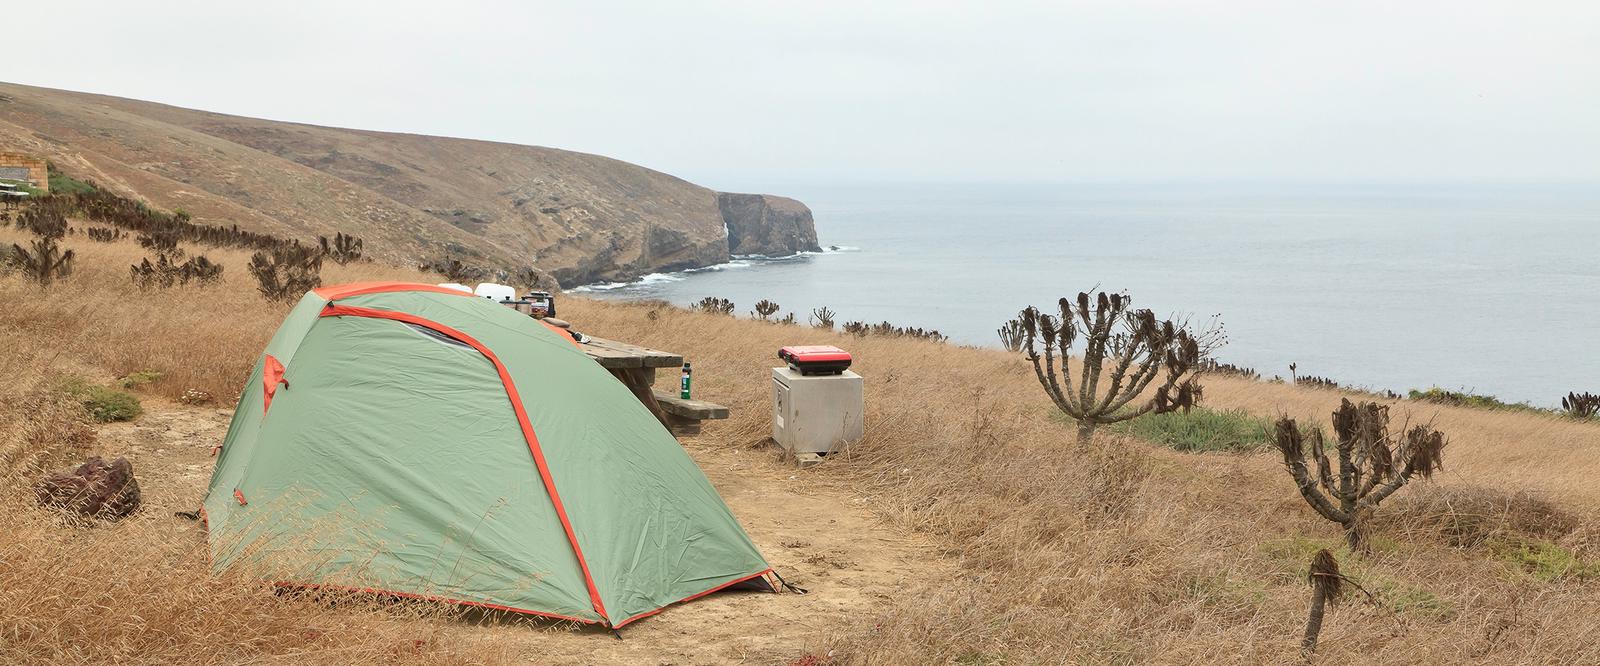 Tent sitting in dried grass on a ocean bluff overlooking the coastlineSANTA BARBARA ISLAND